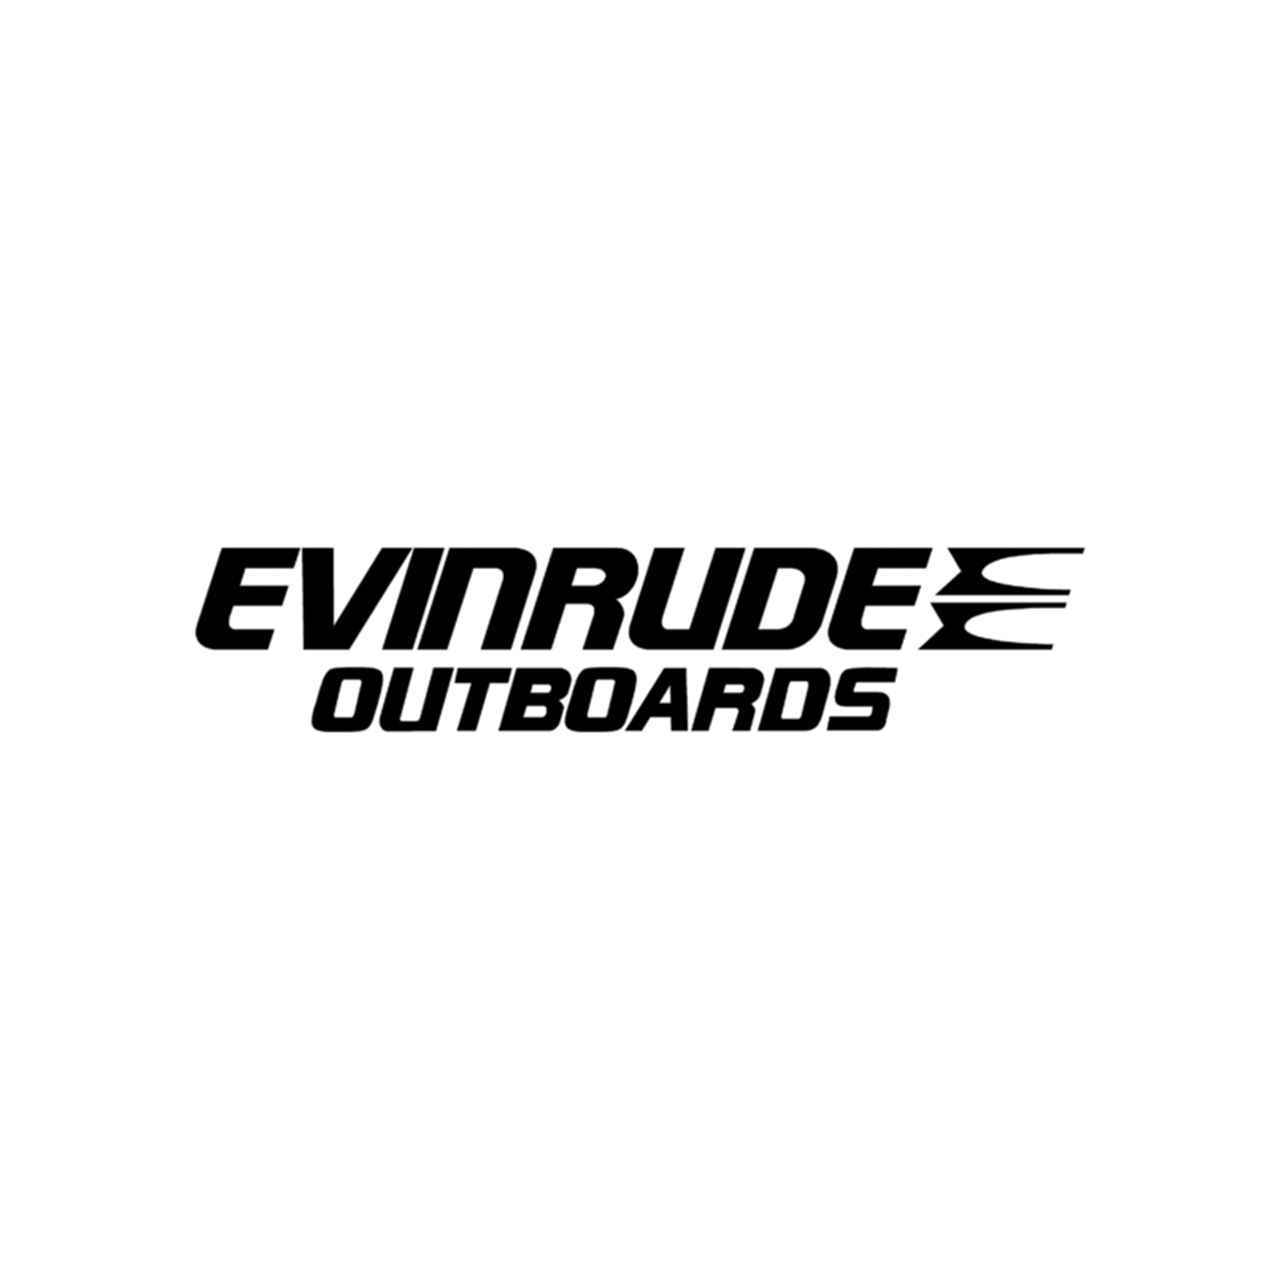 Evinrude Logo - Evinrude Outboards Vinyl Decal